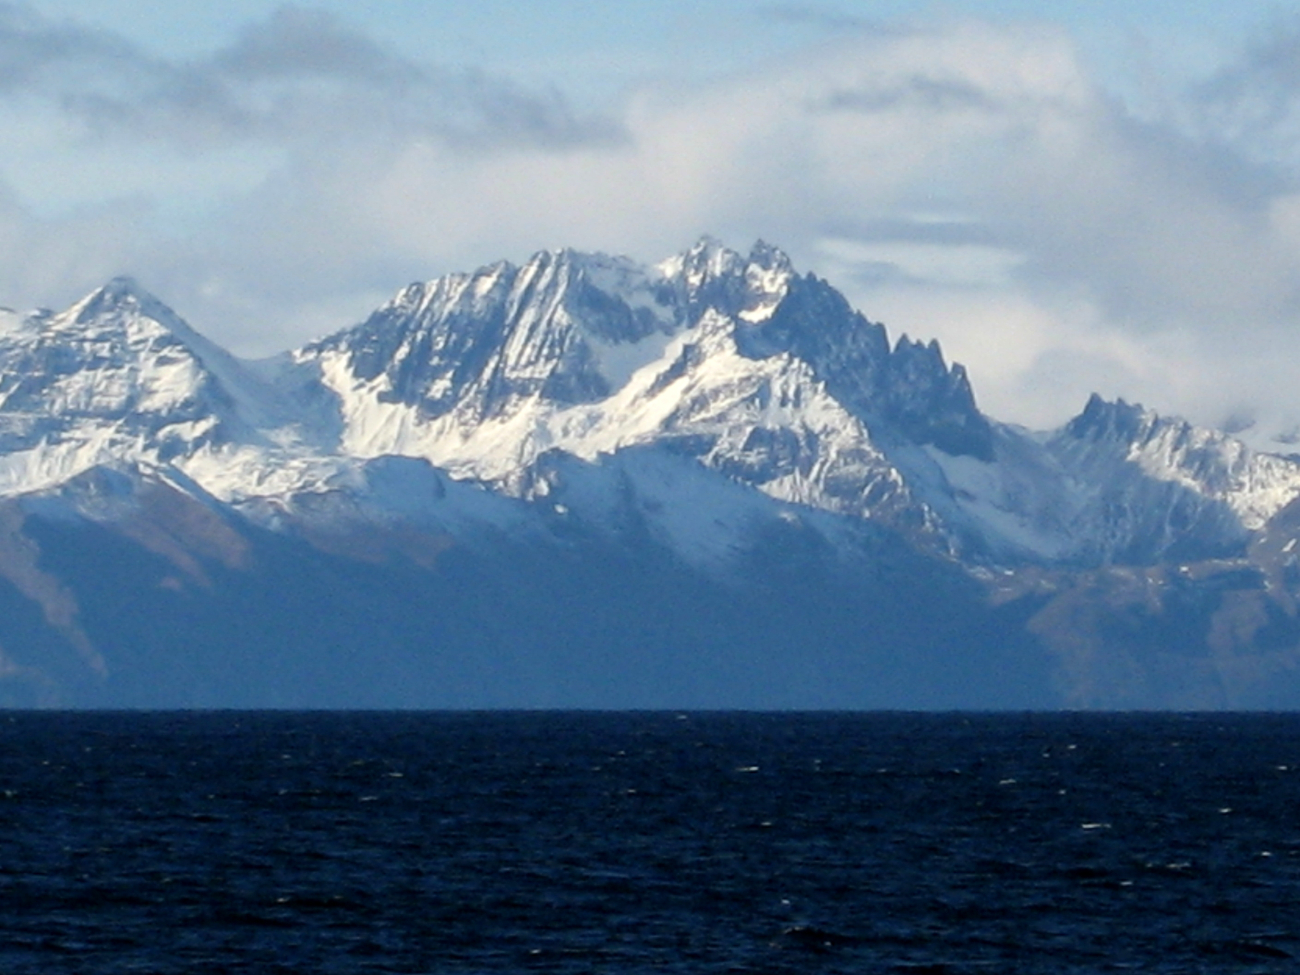 A scene along the Alaska Peninsula